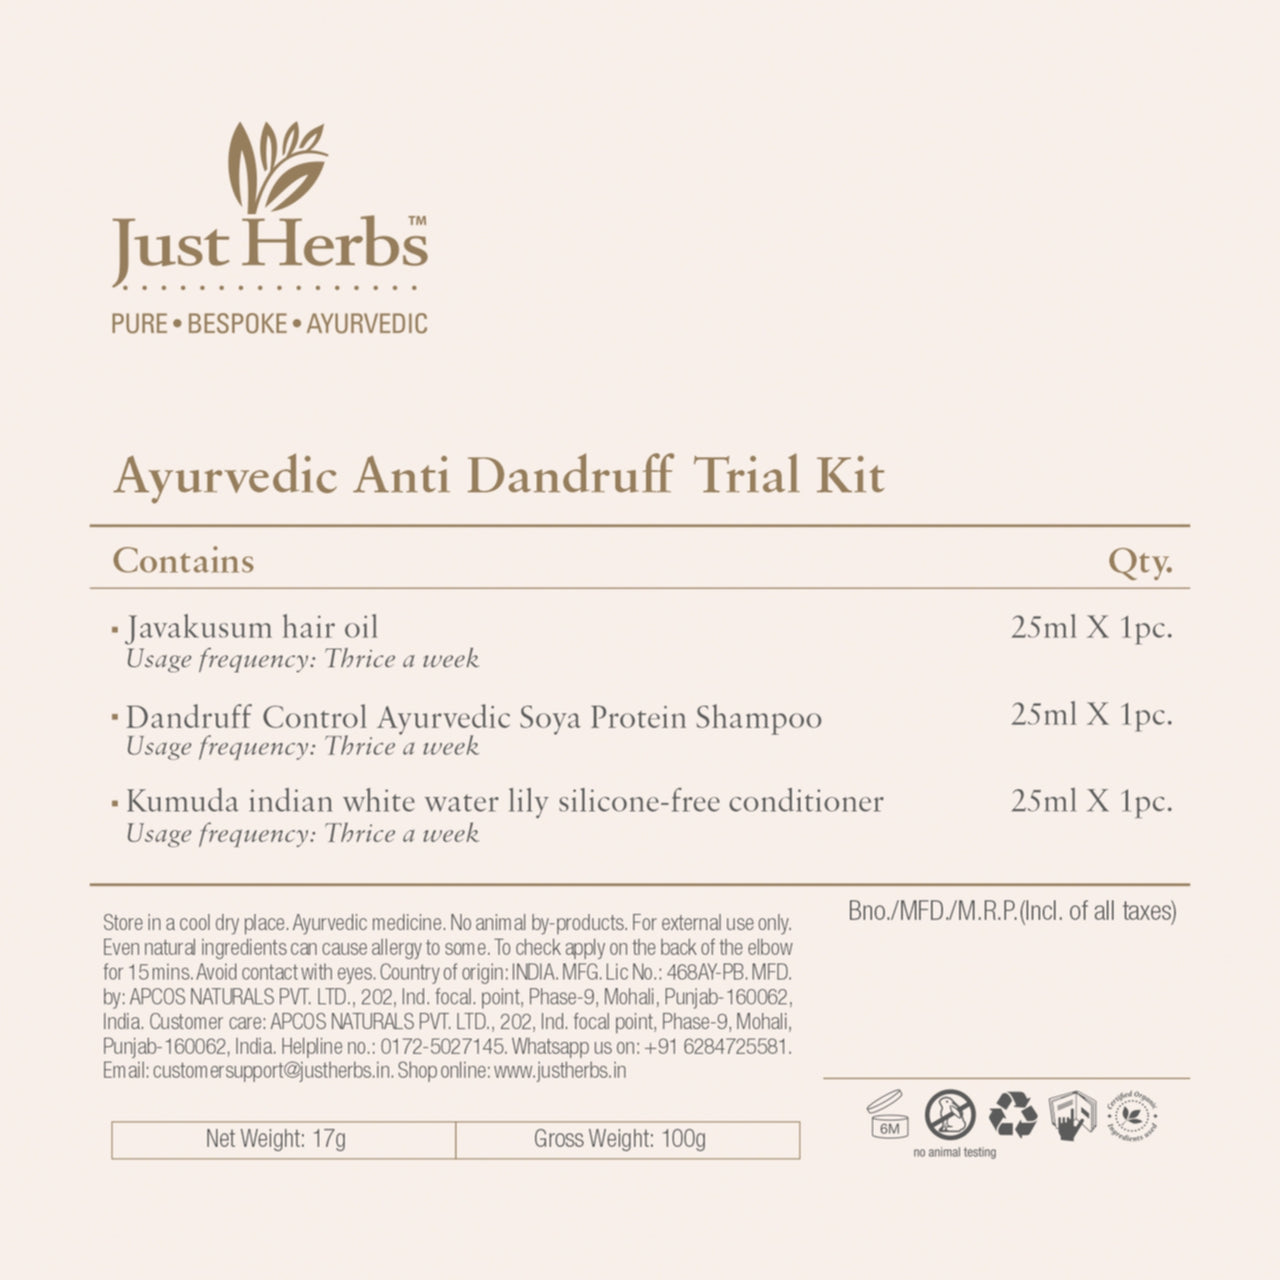 Ayurvedic Anti Dandruff Trial Kit